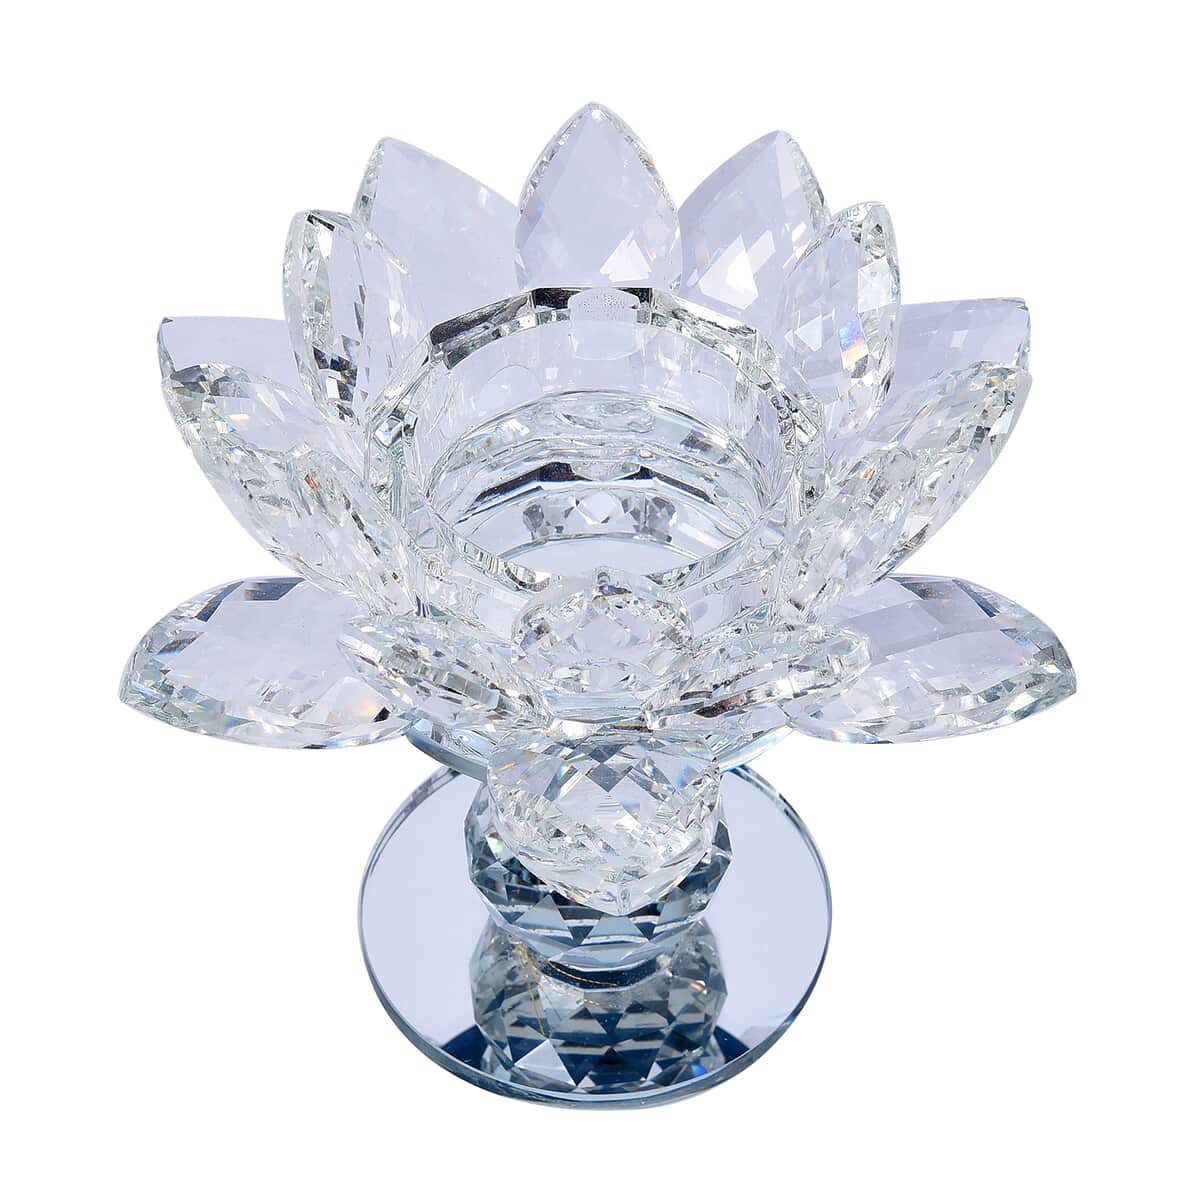 White Crystal Lotus Flower Candle Holder (5) image number 0